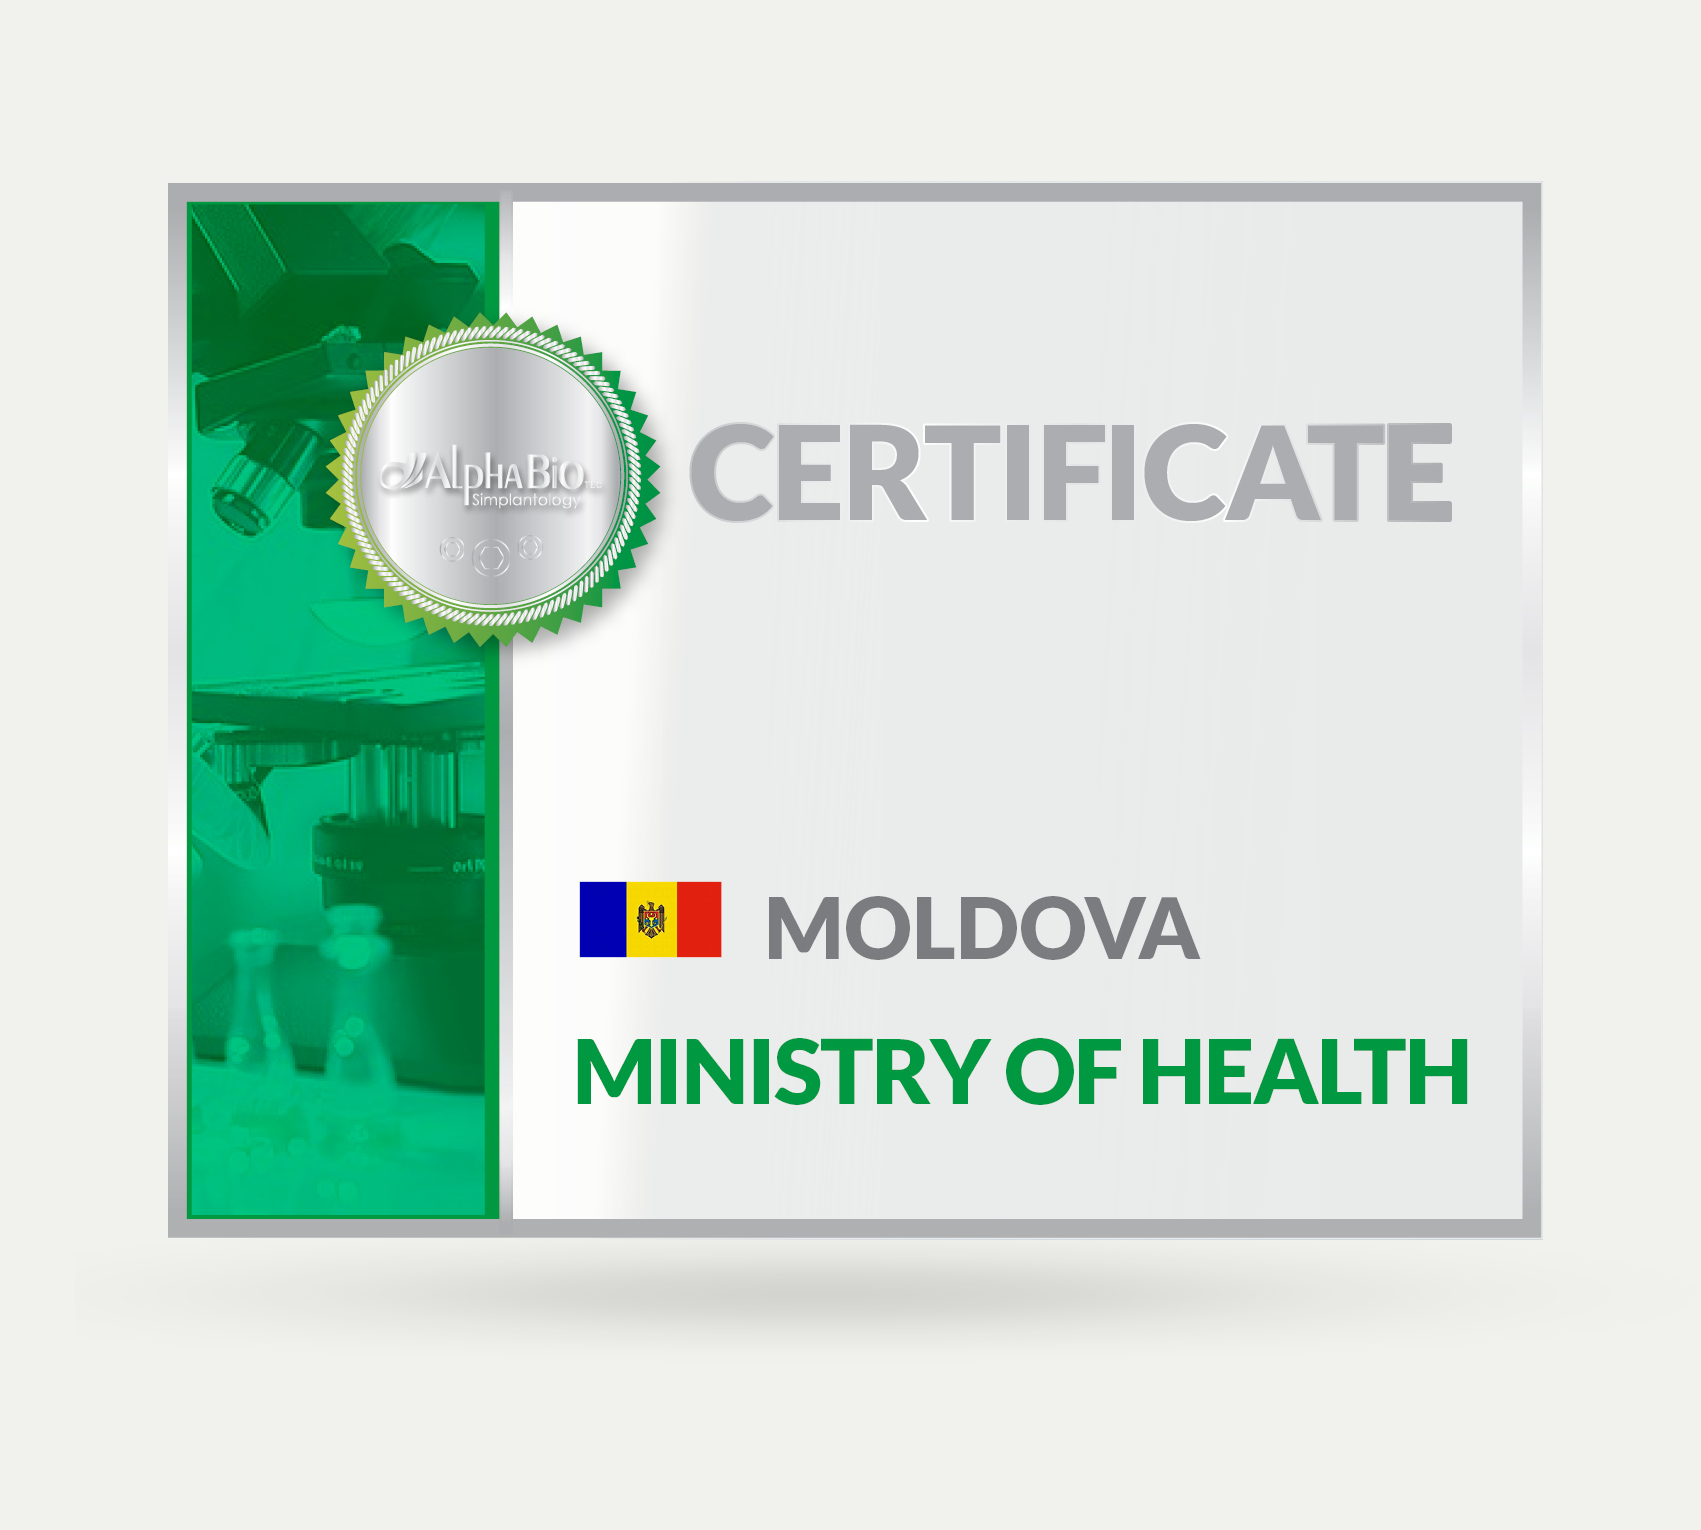 Certificate_Moldova - Alpha Bio Tec